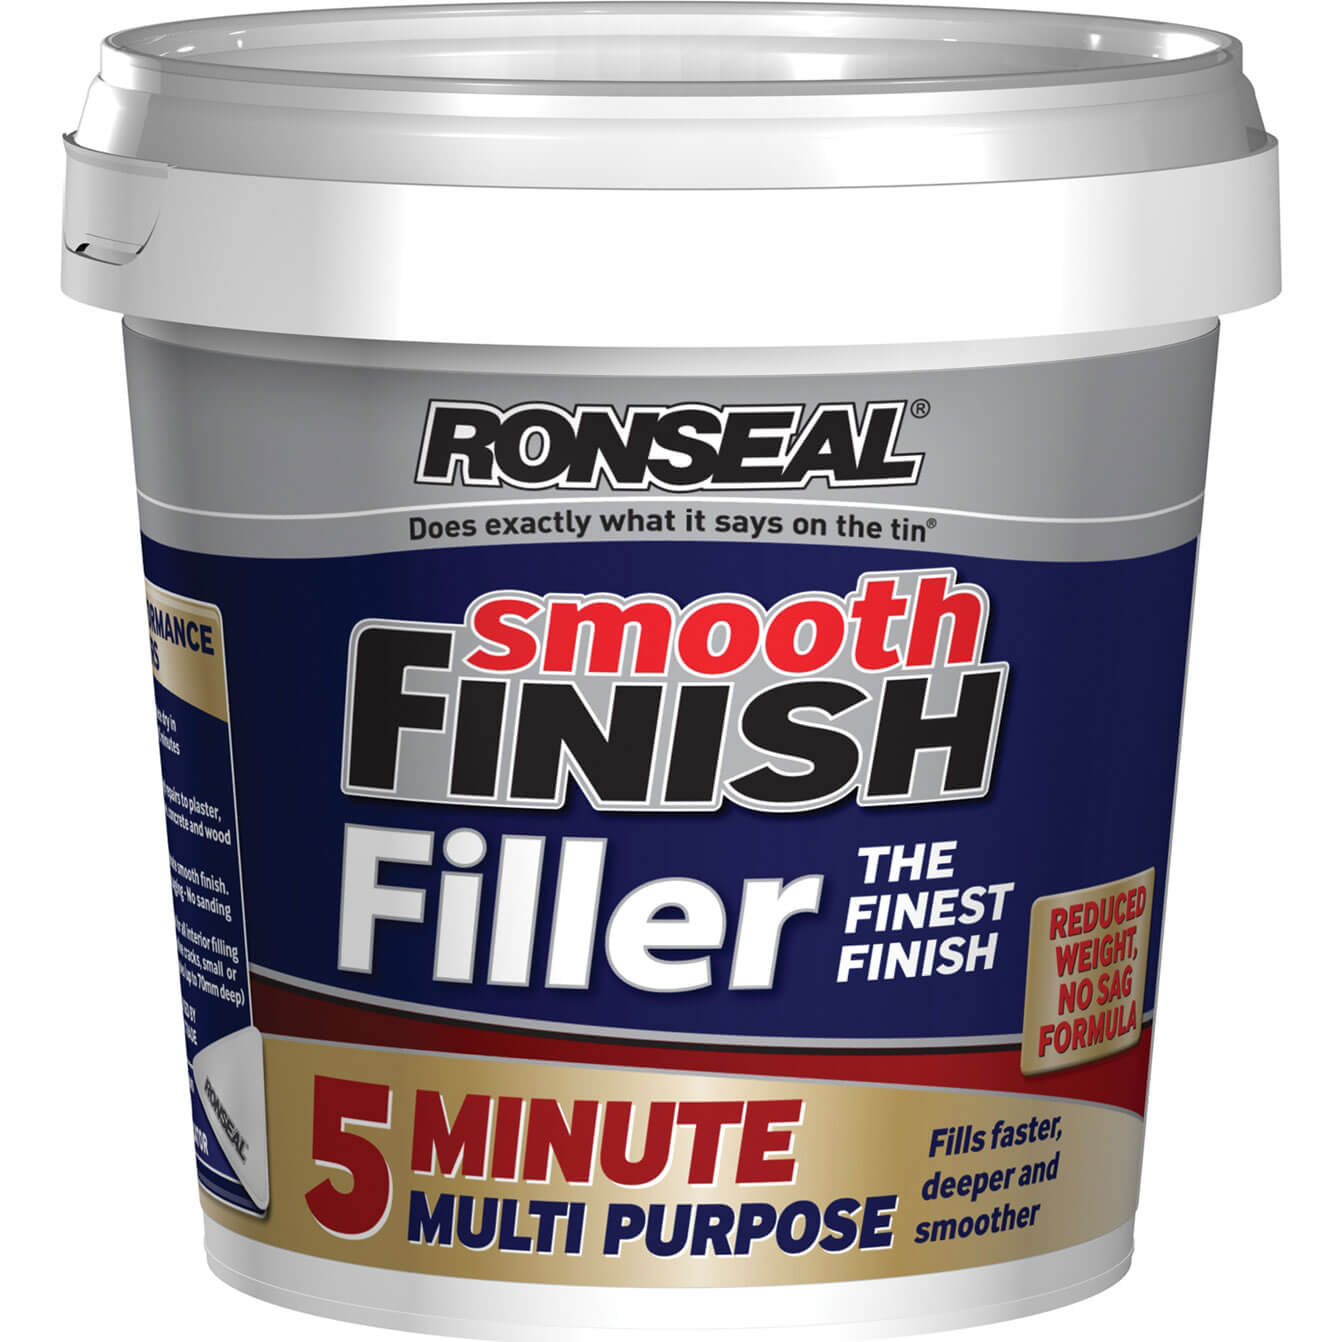 Image of Ronseal Smooth Finish 5 Minute Multipurpose Filler Tub 600ml